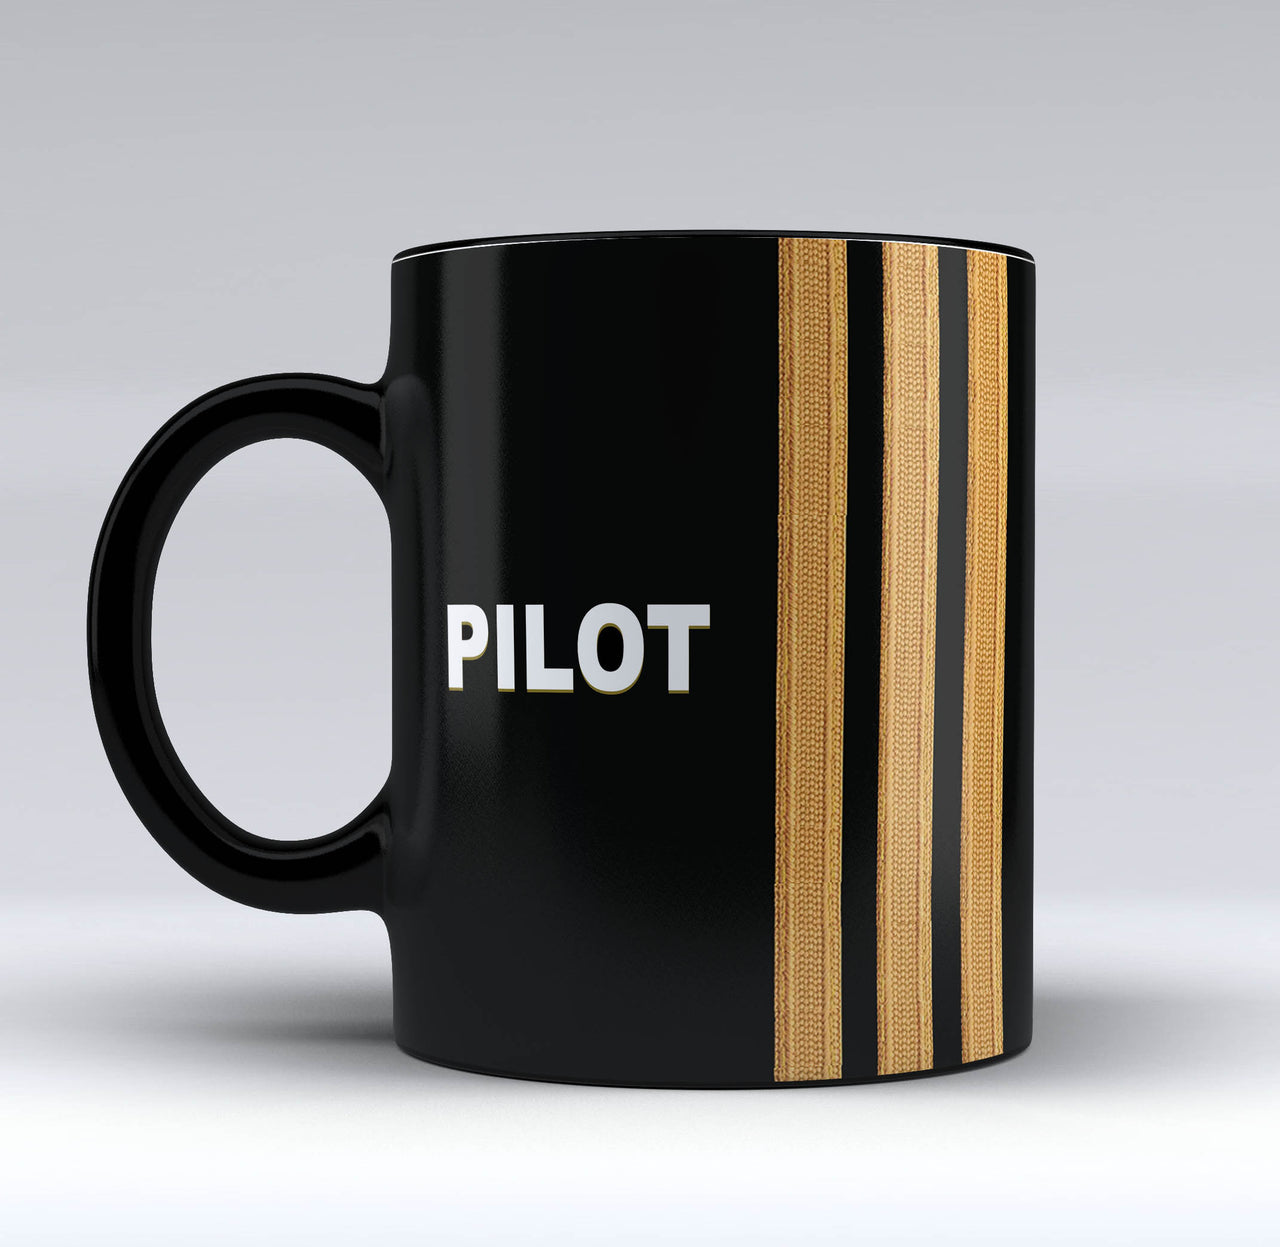 PILOT & Pilot Epaulettes (4,3,2 Lines) Designed Black Mugs